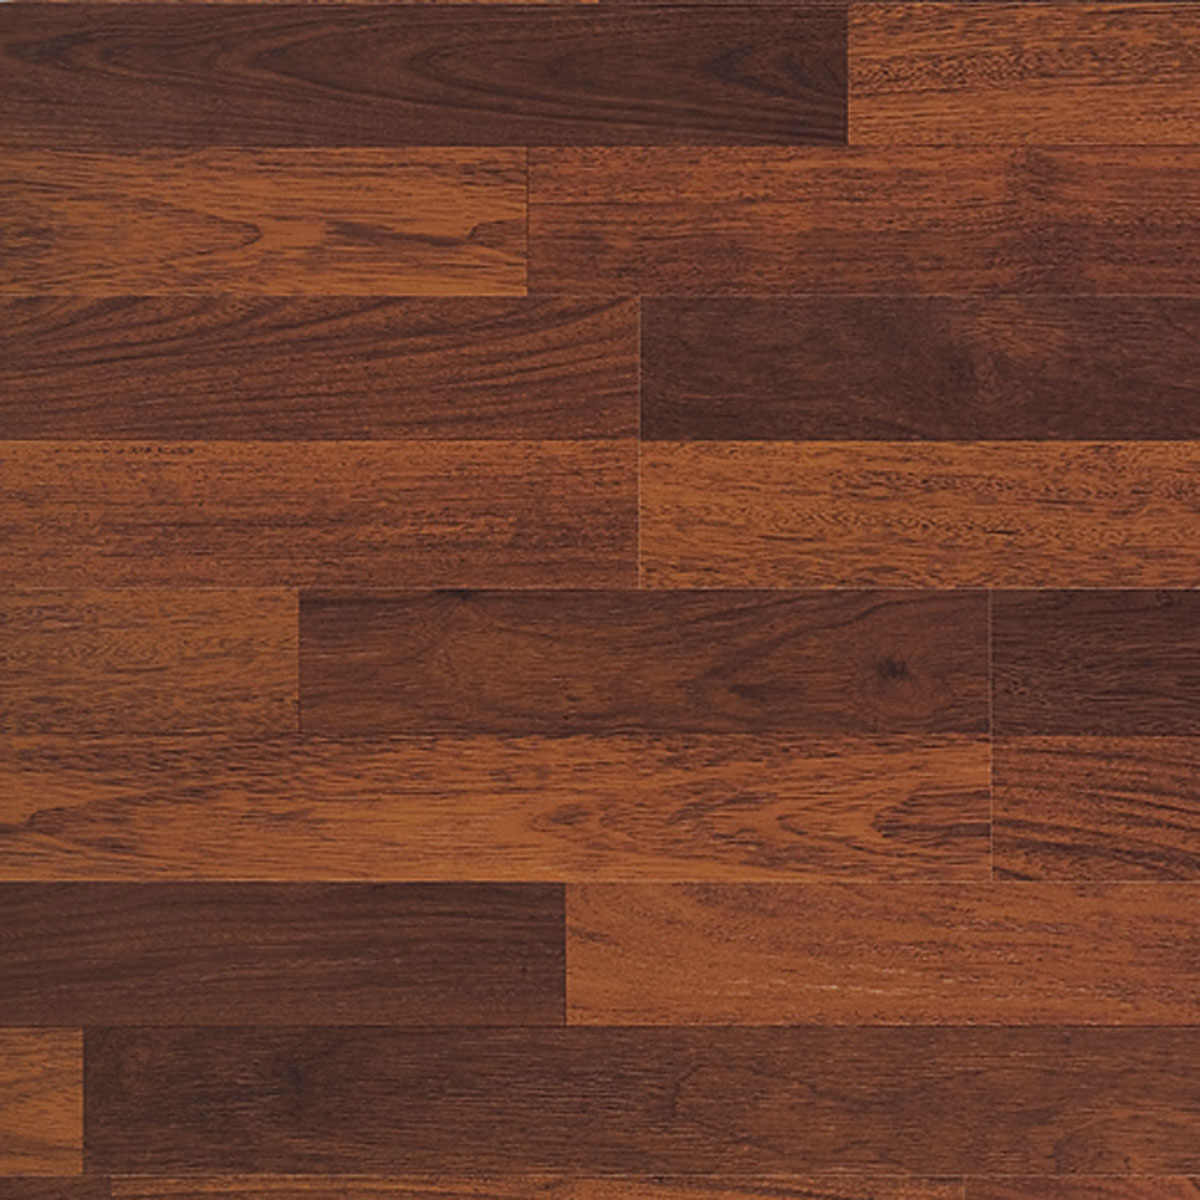 laminated wooden flooring photo - 2 BNERTCD